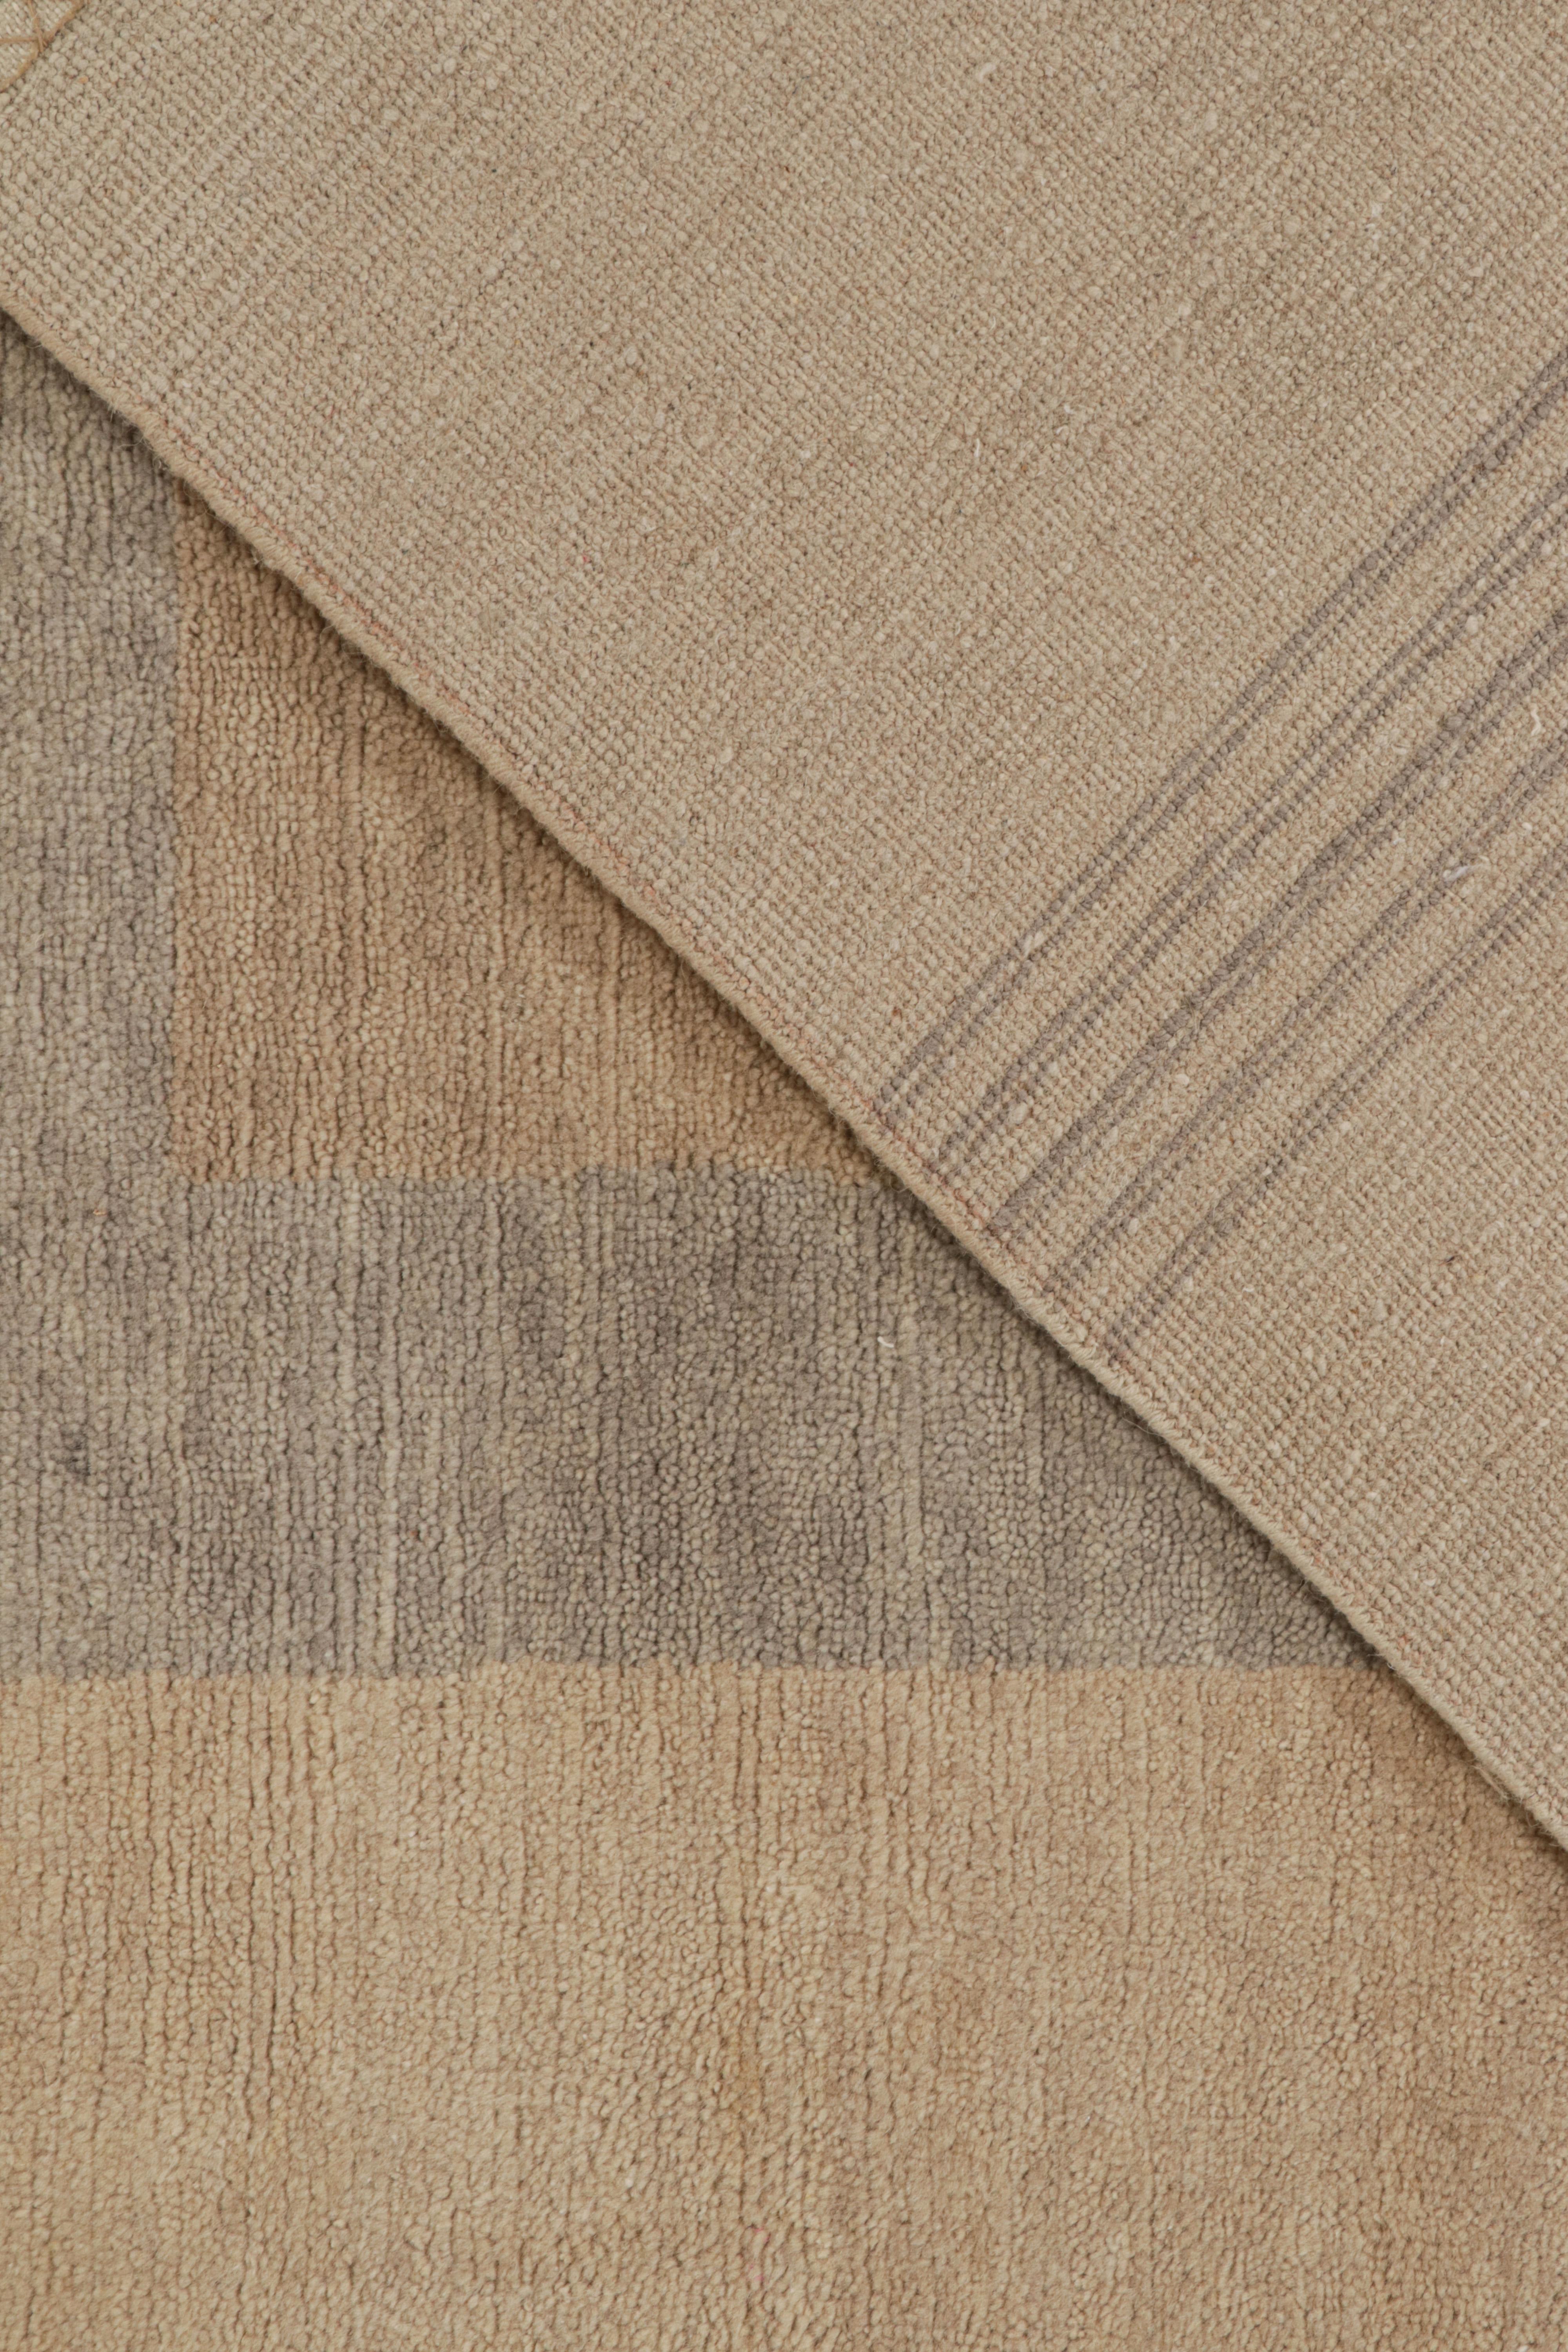 Wool Rug & Kilim’s French Art Deco Style Rug in Beige-Brown & Grey Geometric Pattern For Sale